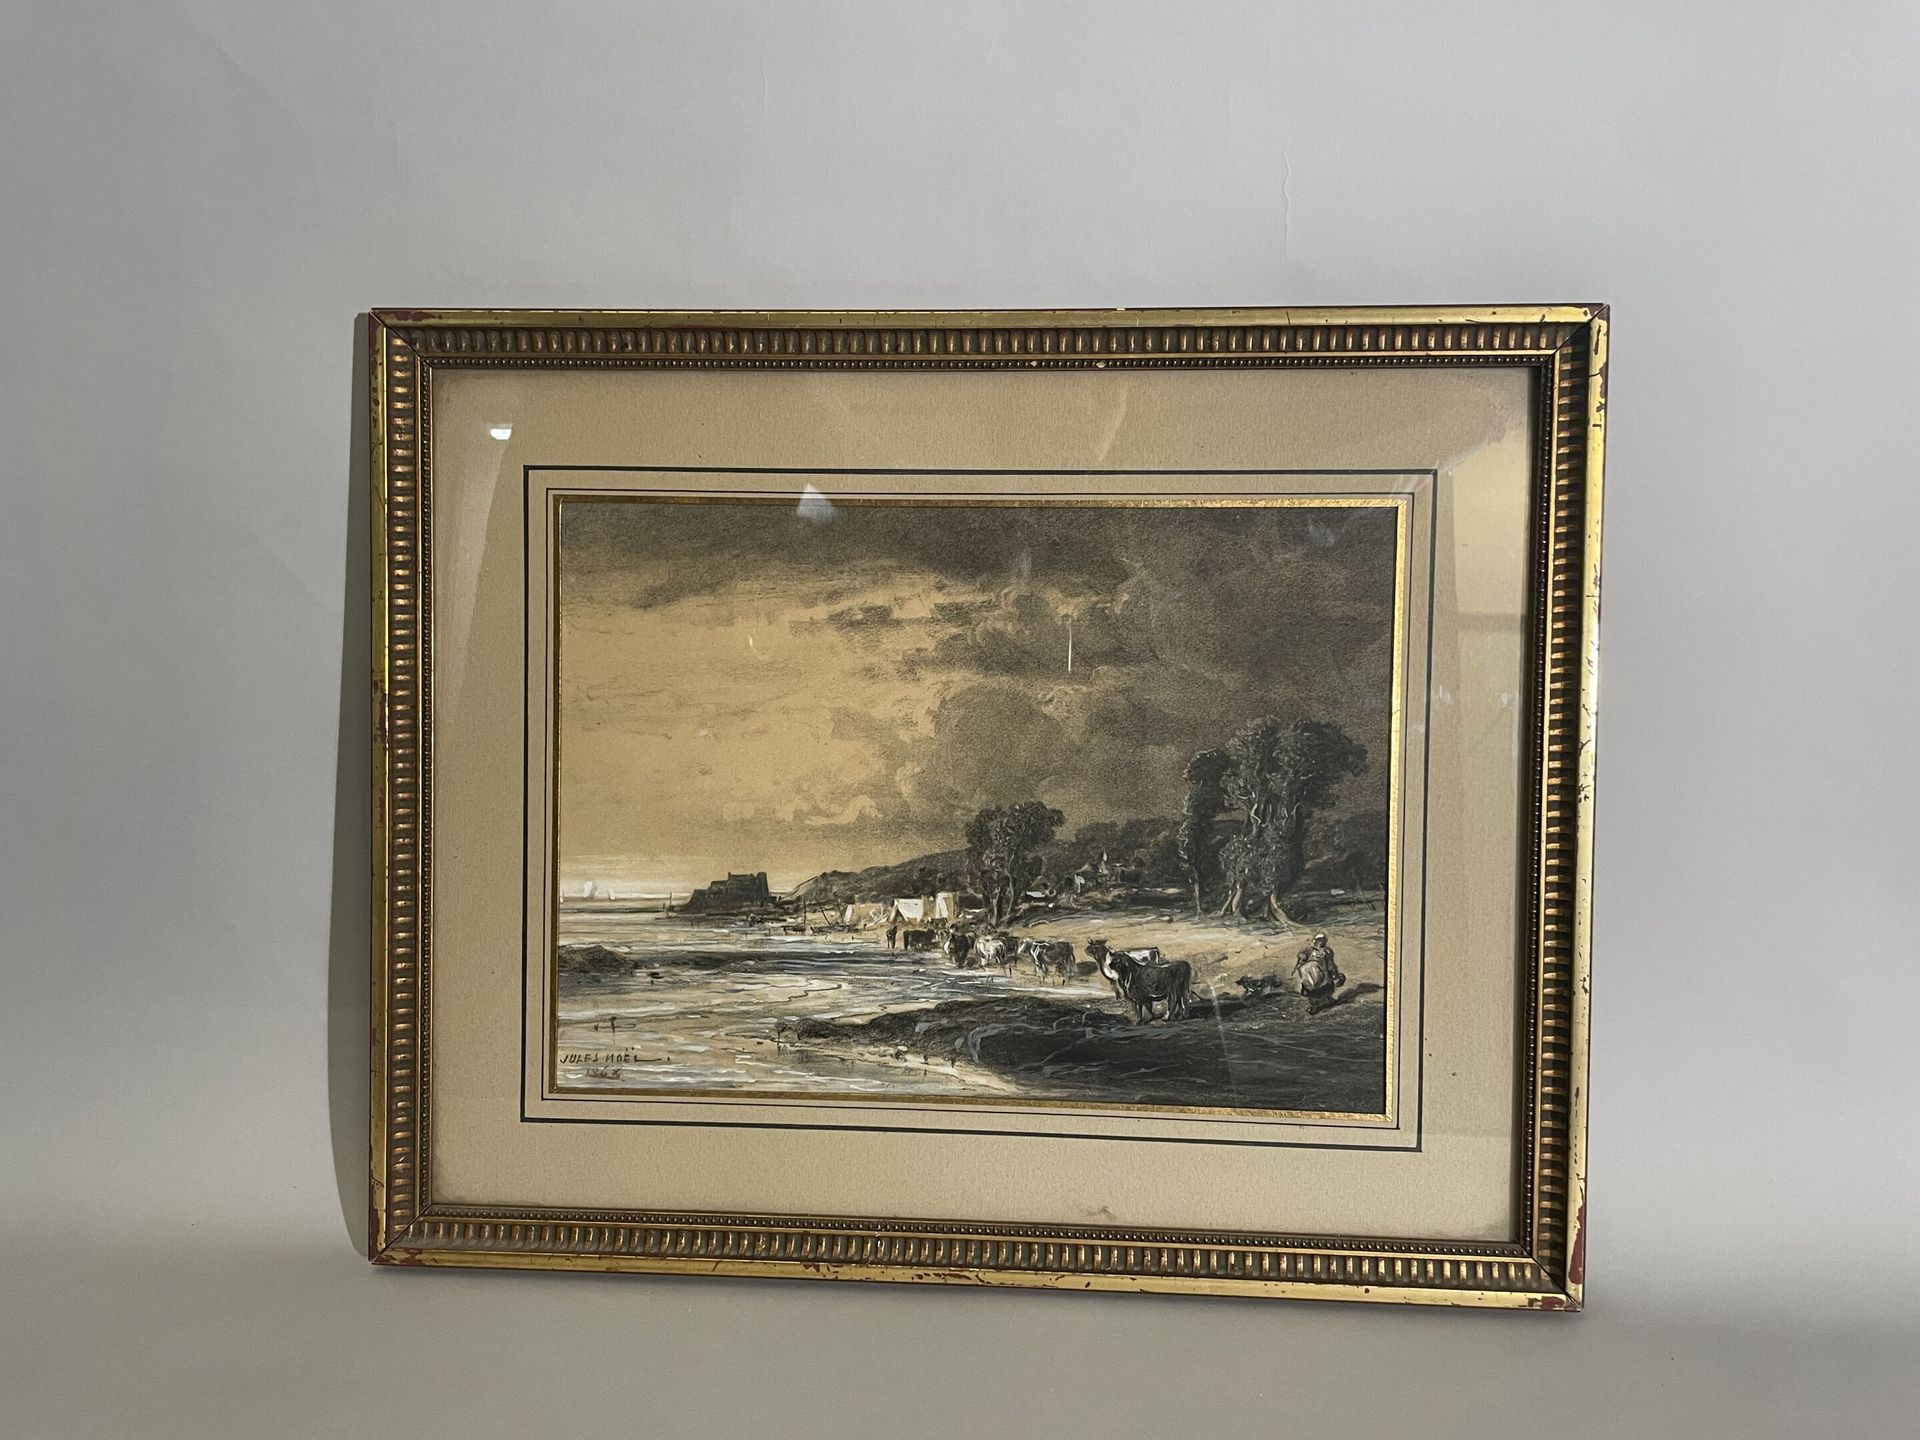 Null 归于Jules-Achille NOËL (1810/15-1881)。
"在河口饮水的牛群"。
纸上炭笔和水粉画，左下方有签名和日期1865年。 
&hellip;